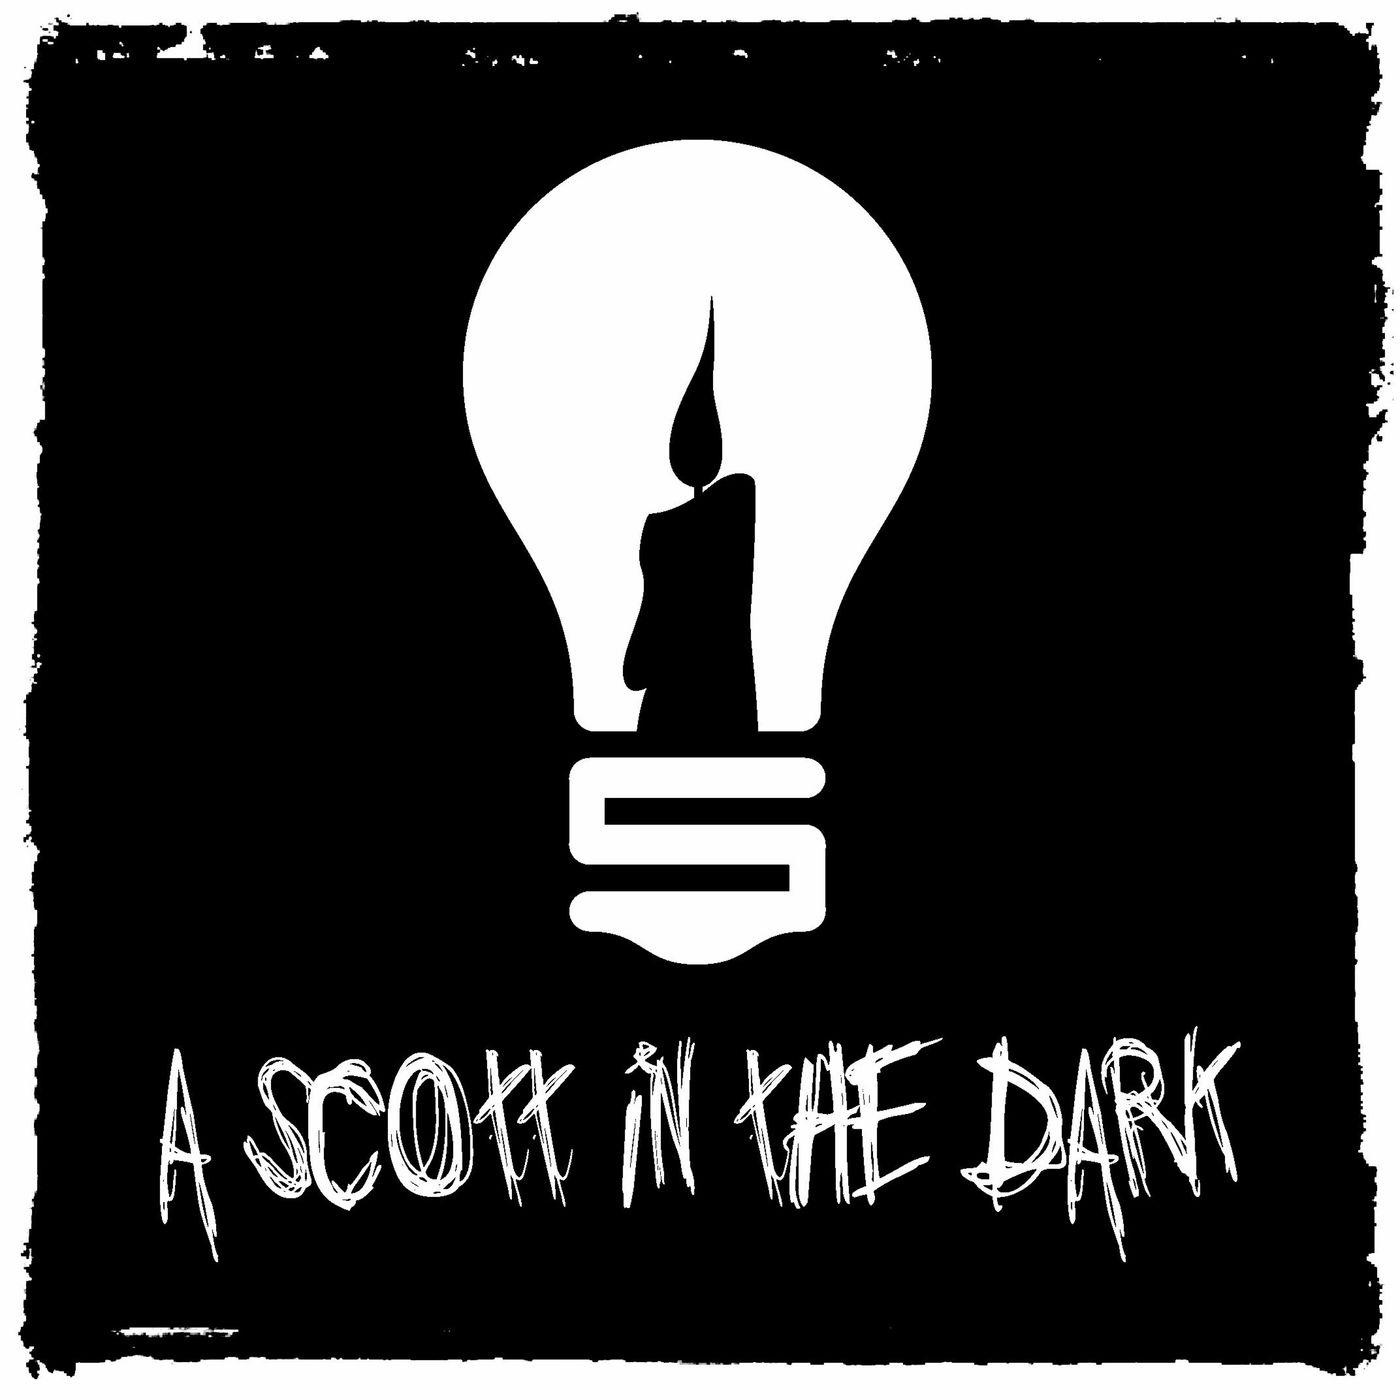 [A Scott In The Dark] Episode 46 - Is Halloween Dead?